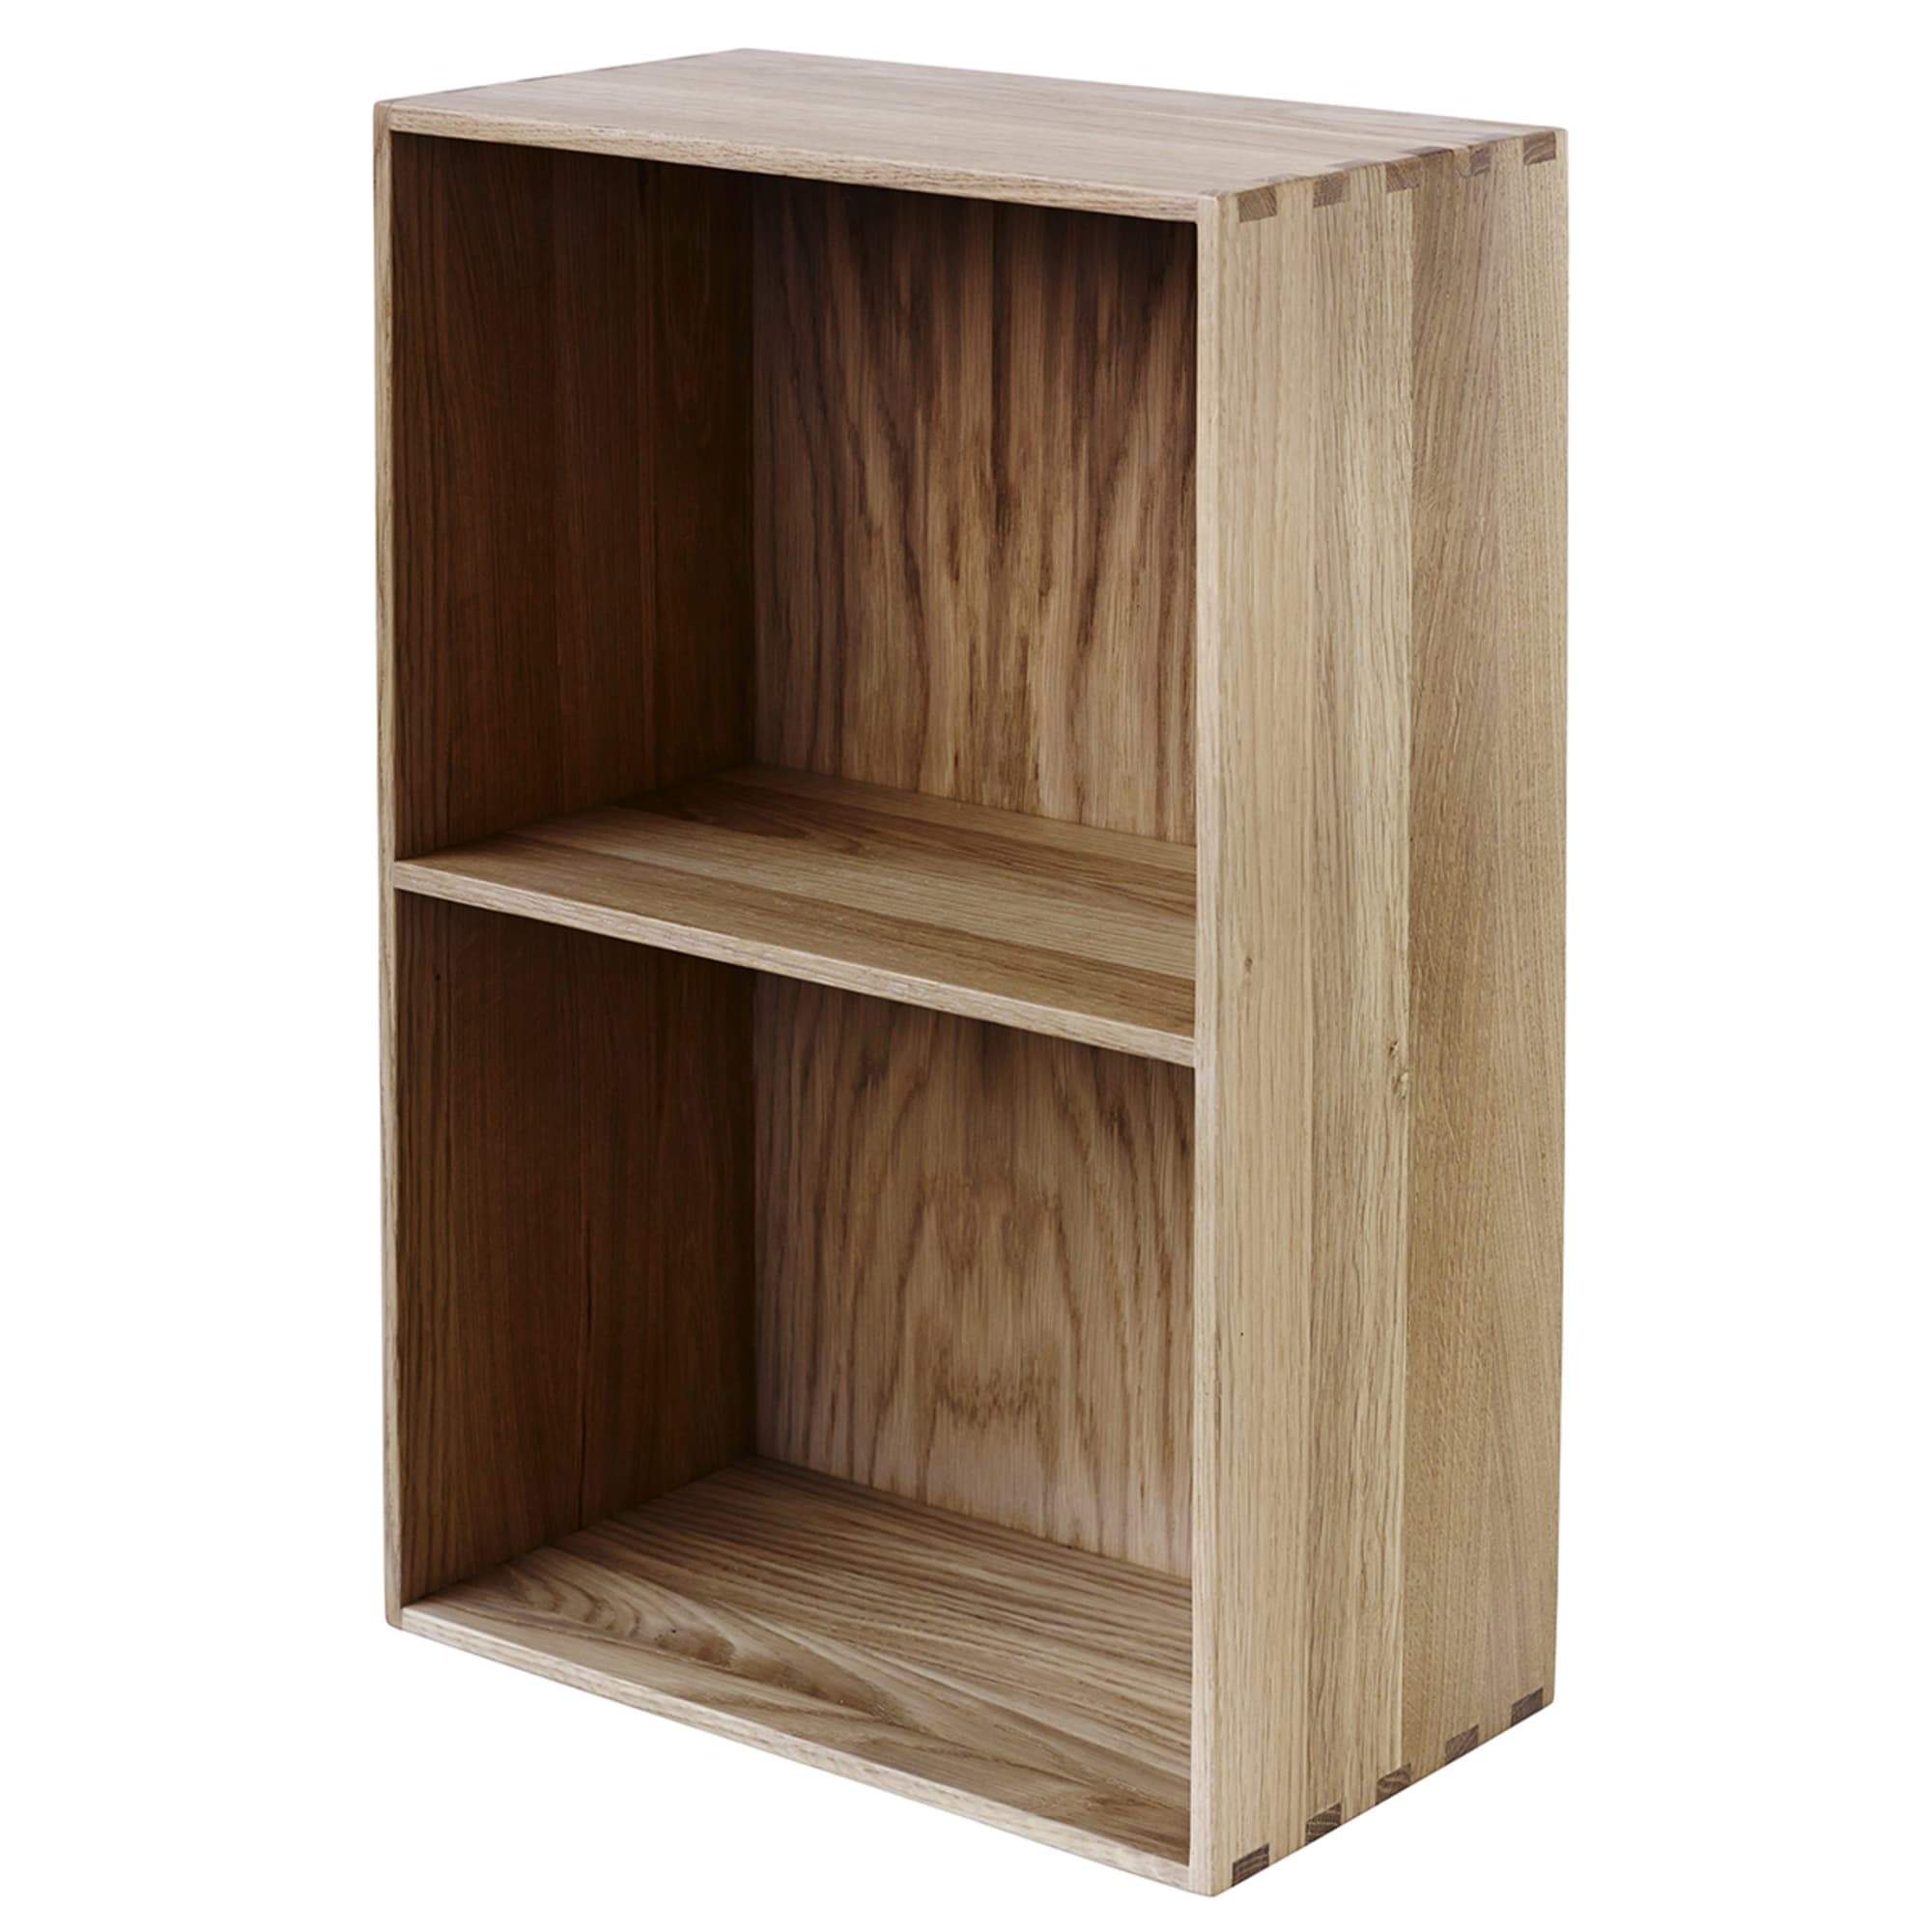 FDB Møbler B98 Bookcase, quercia laccata, 36x54x20cm